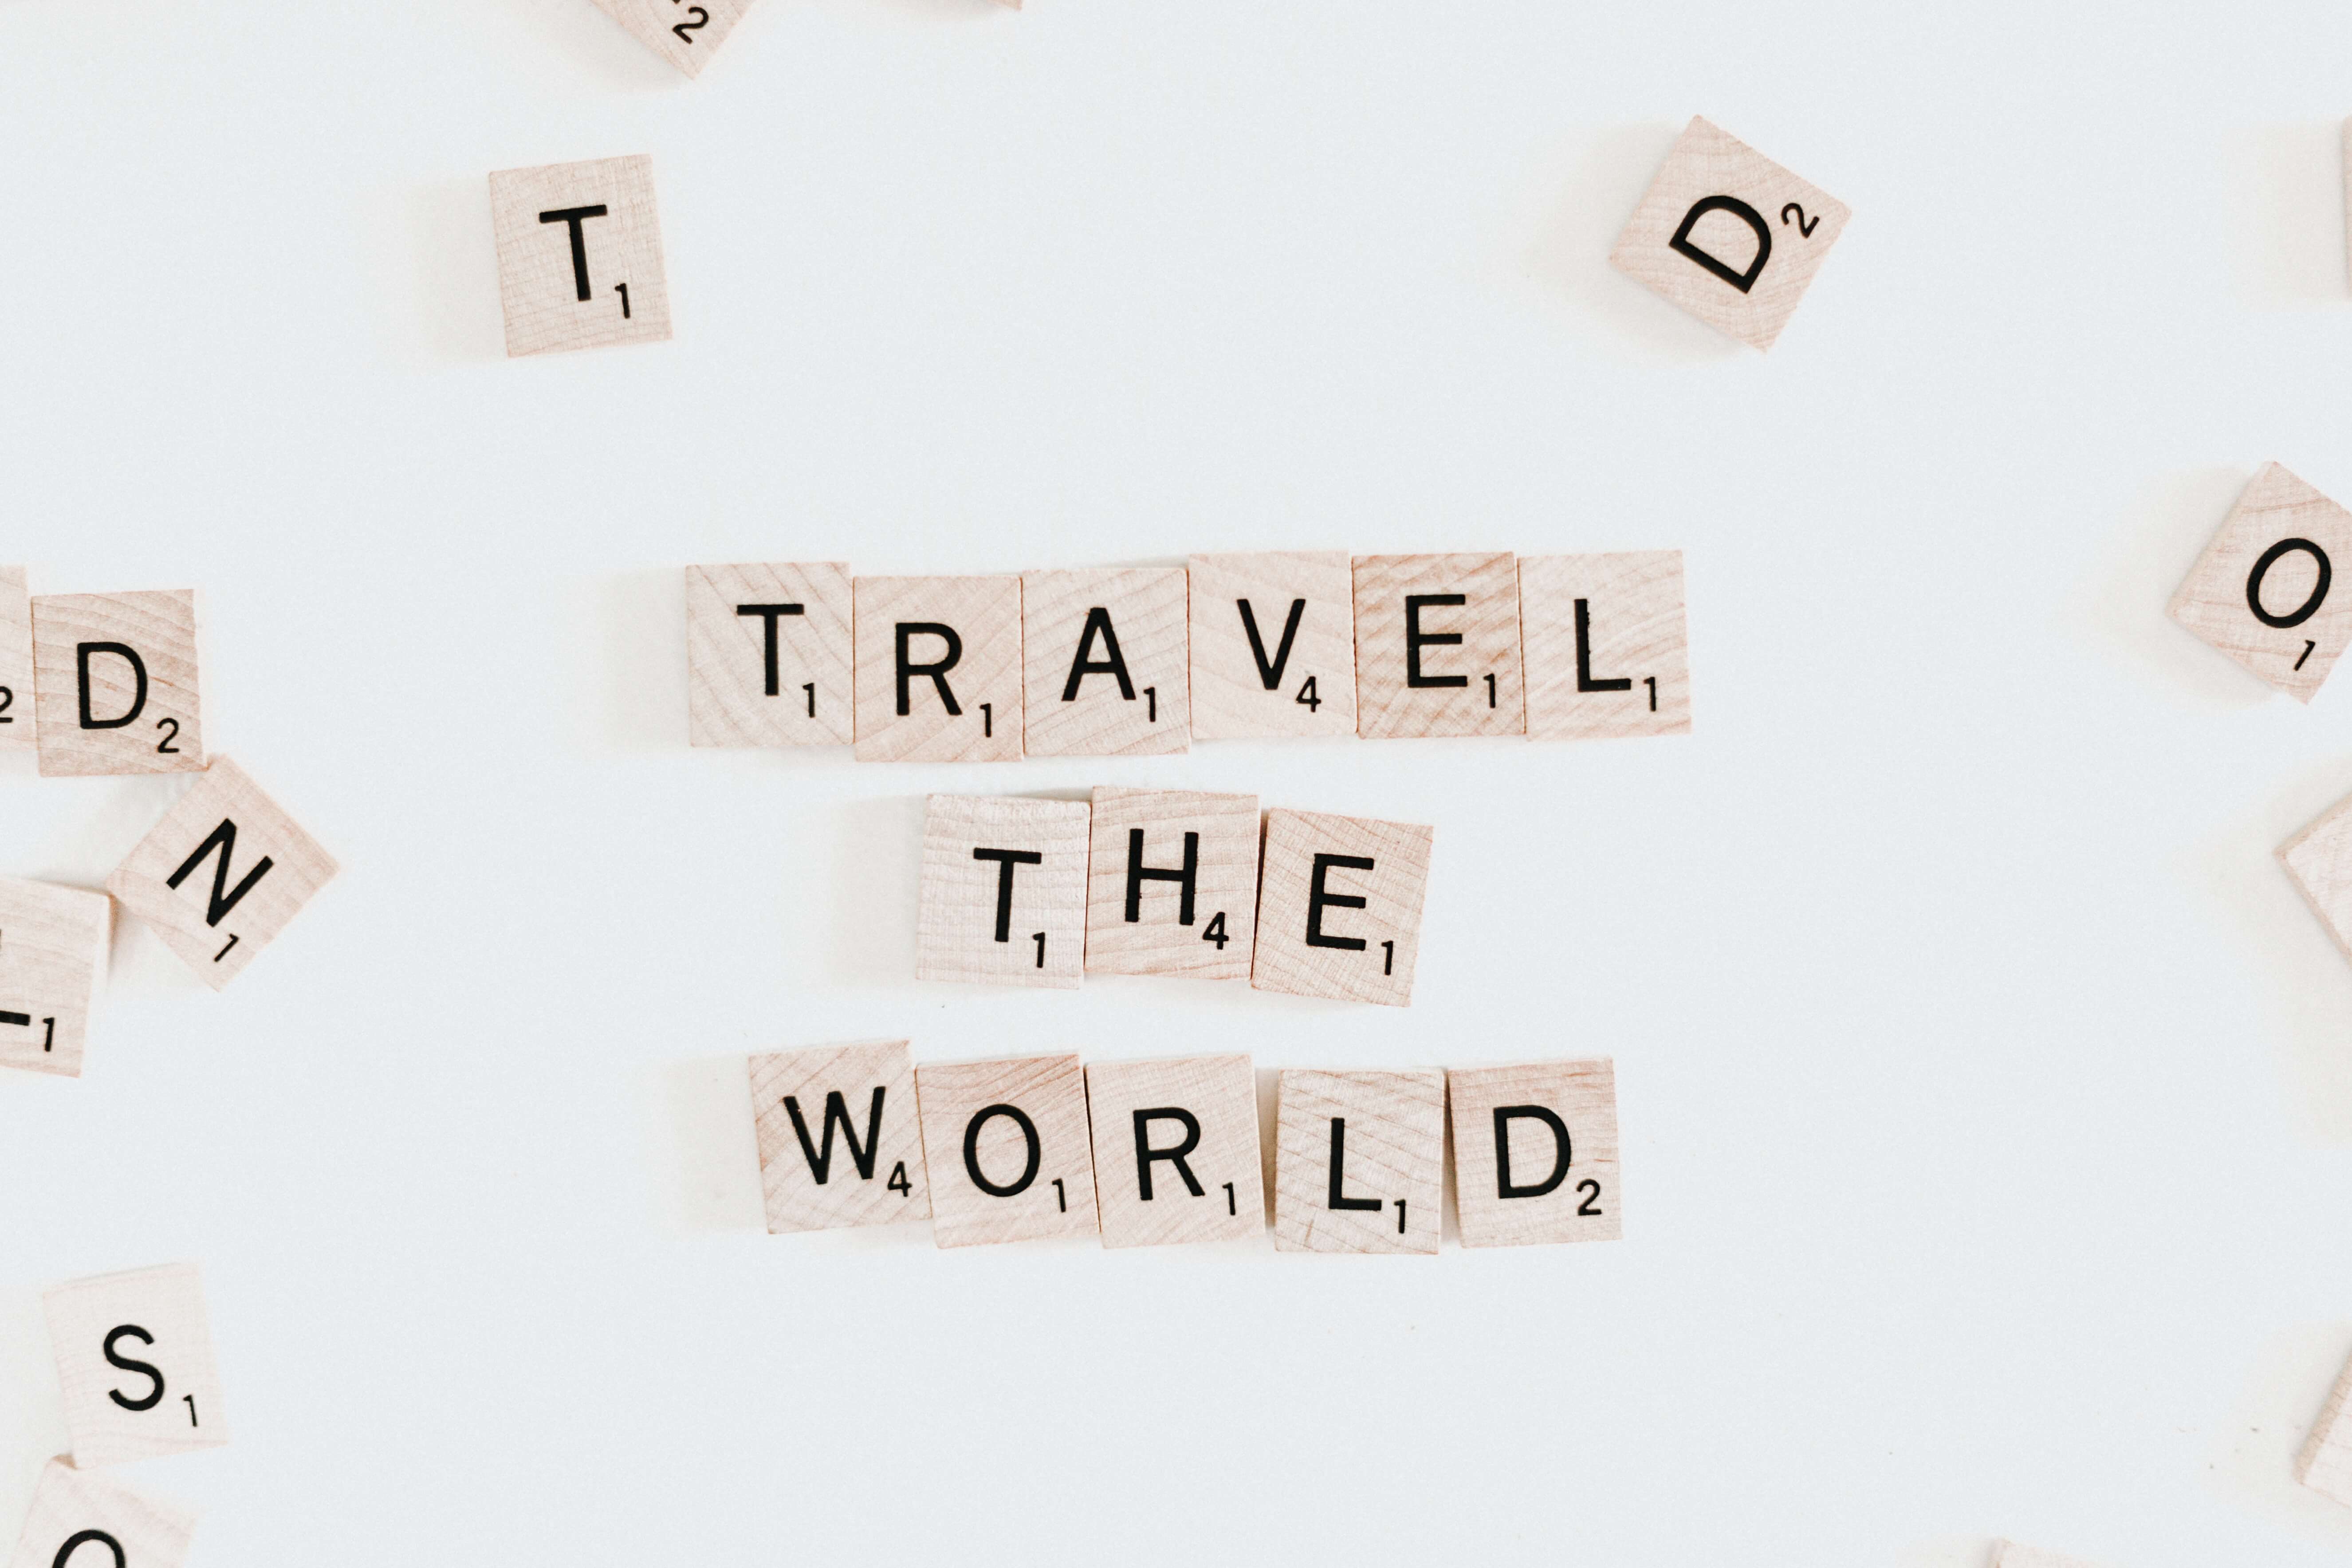 Advice: Travel the world